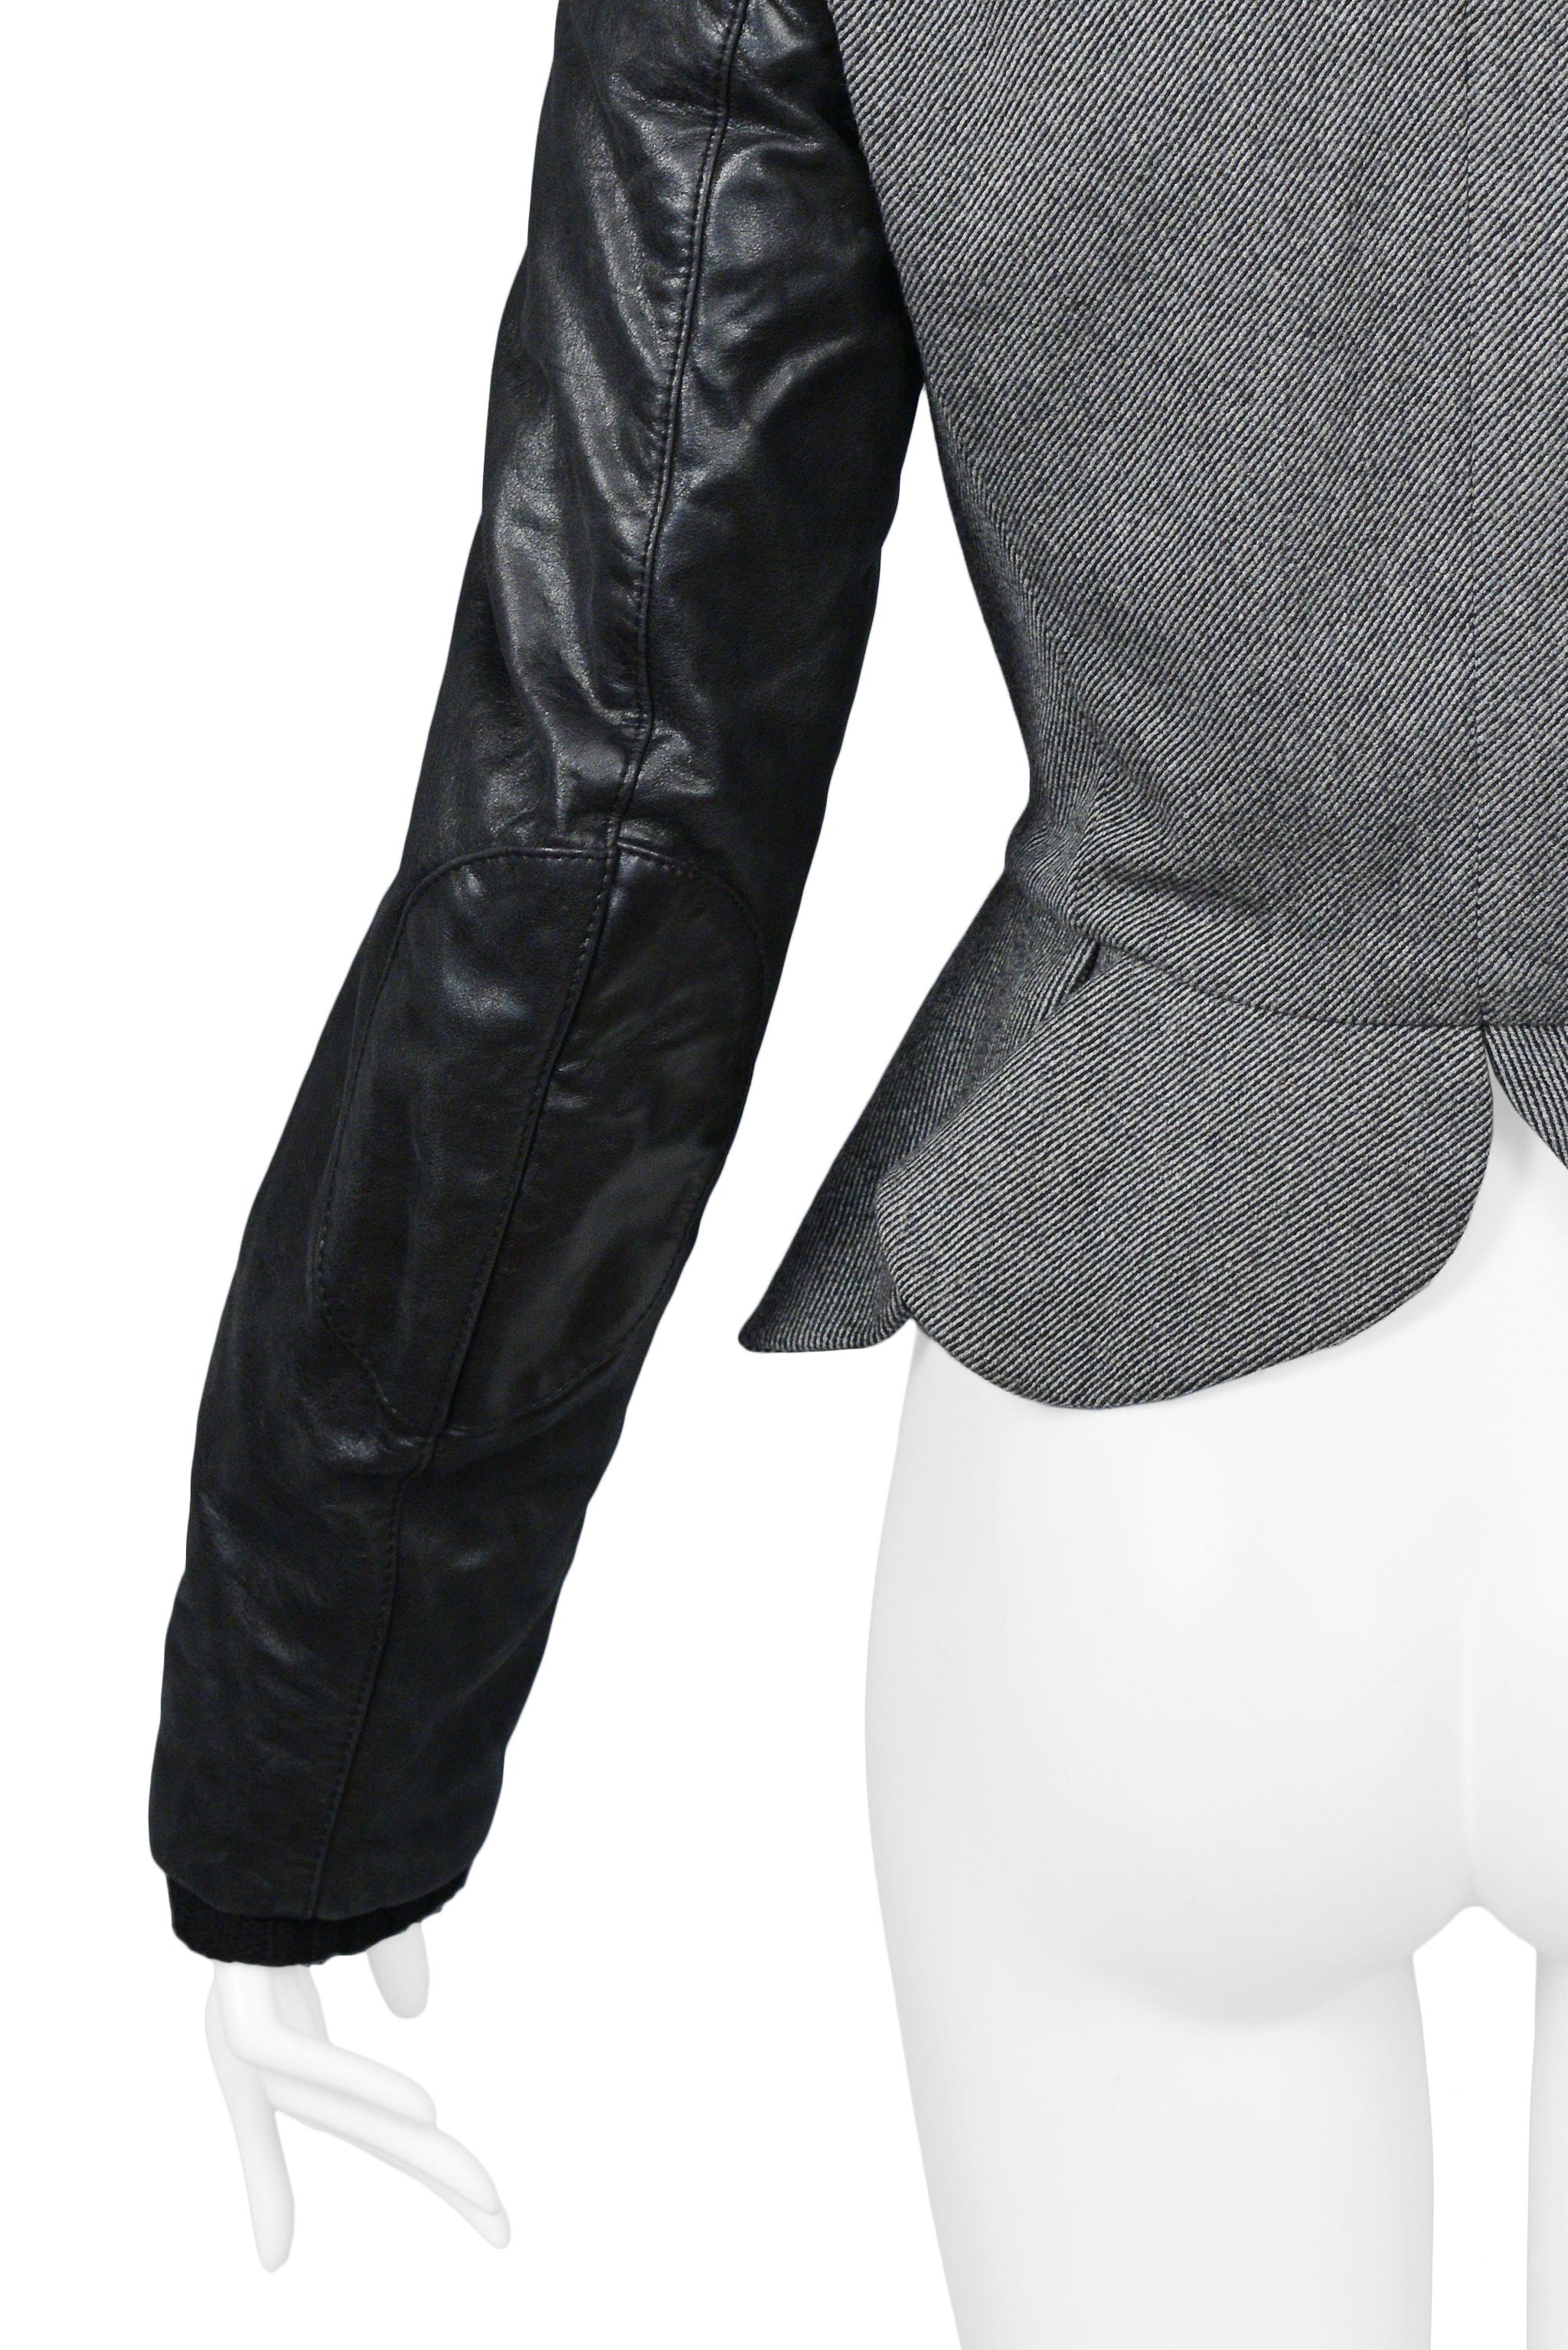 Black Balenciaga By Ghesquiere Grey Wool & Leather Peplum Jacket 2002